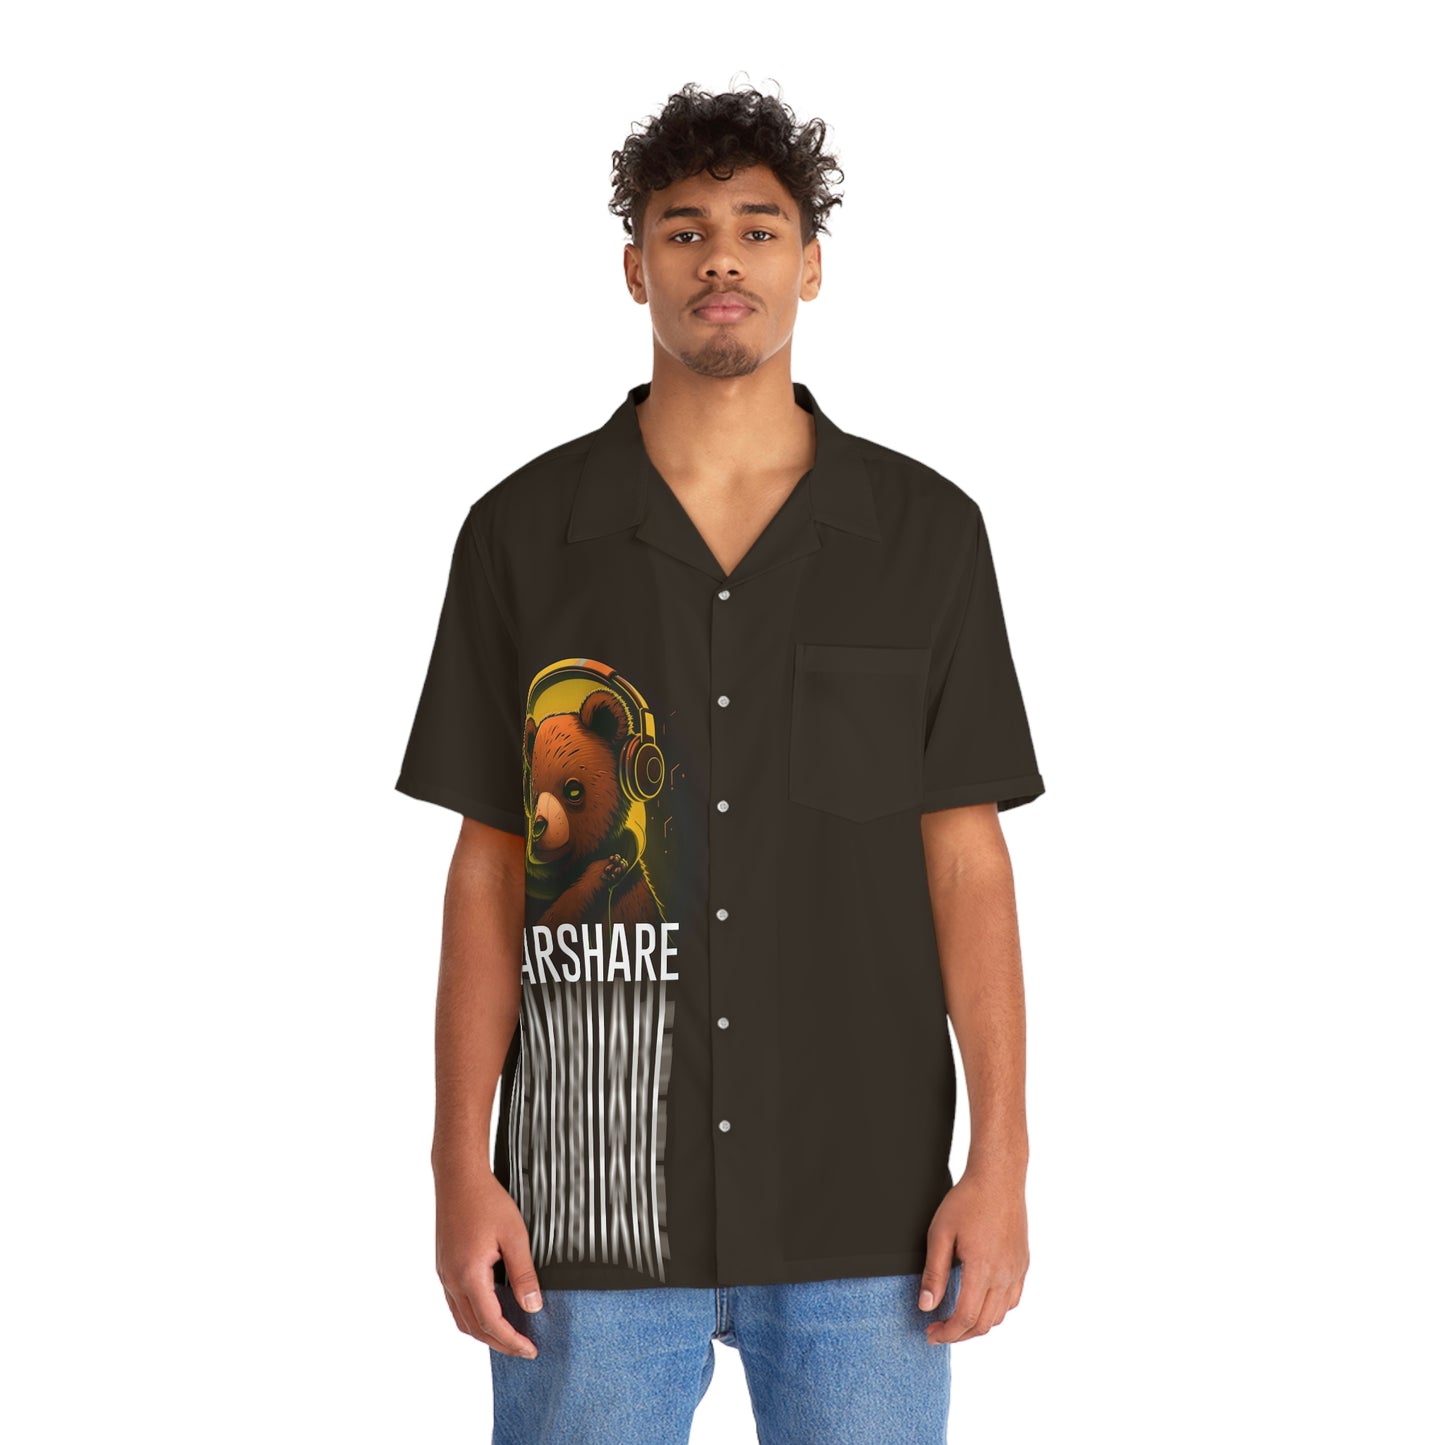 BearShare - Men's Hawaiian Shirt